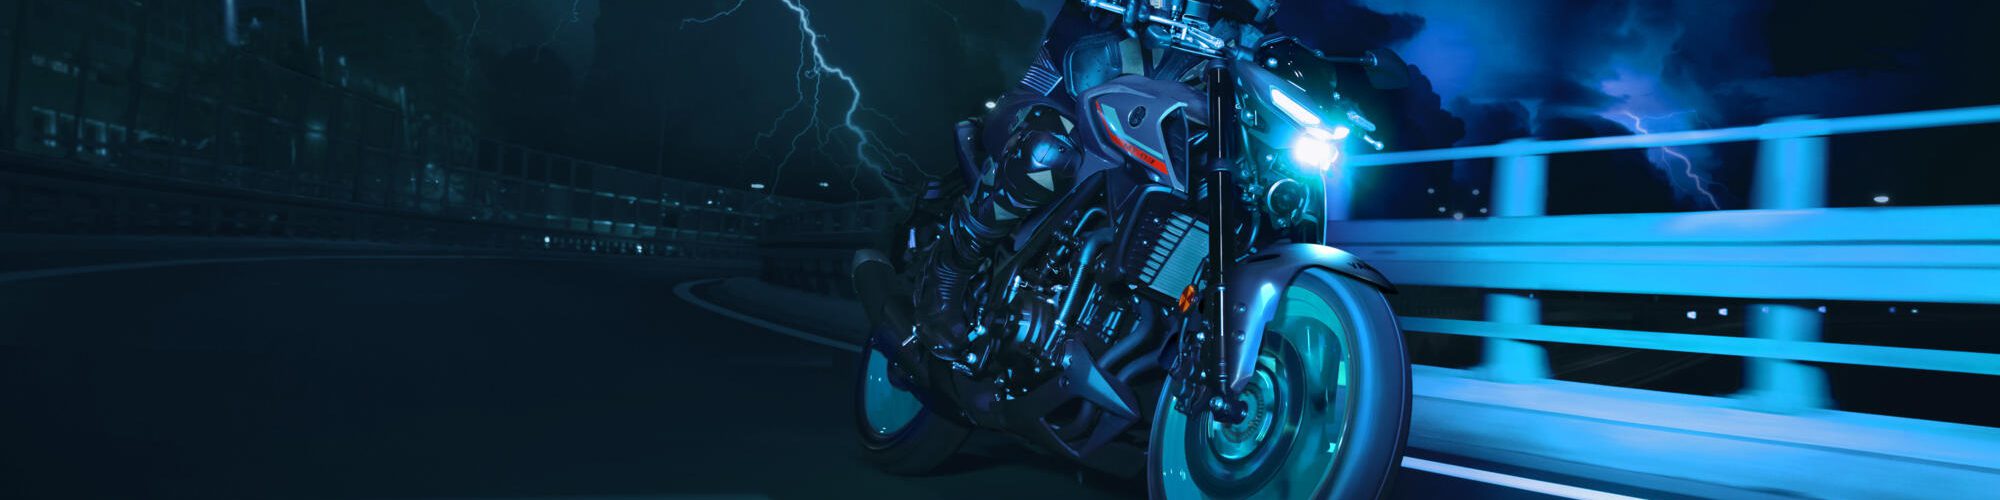 Yamaha MT-03 | MotorCentrumWest